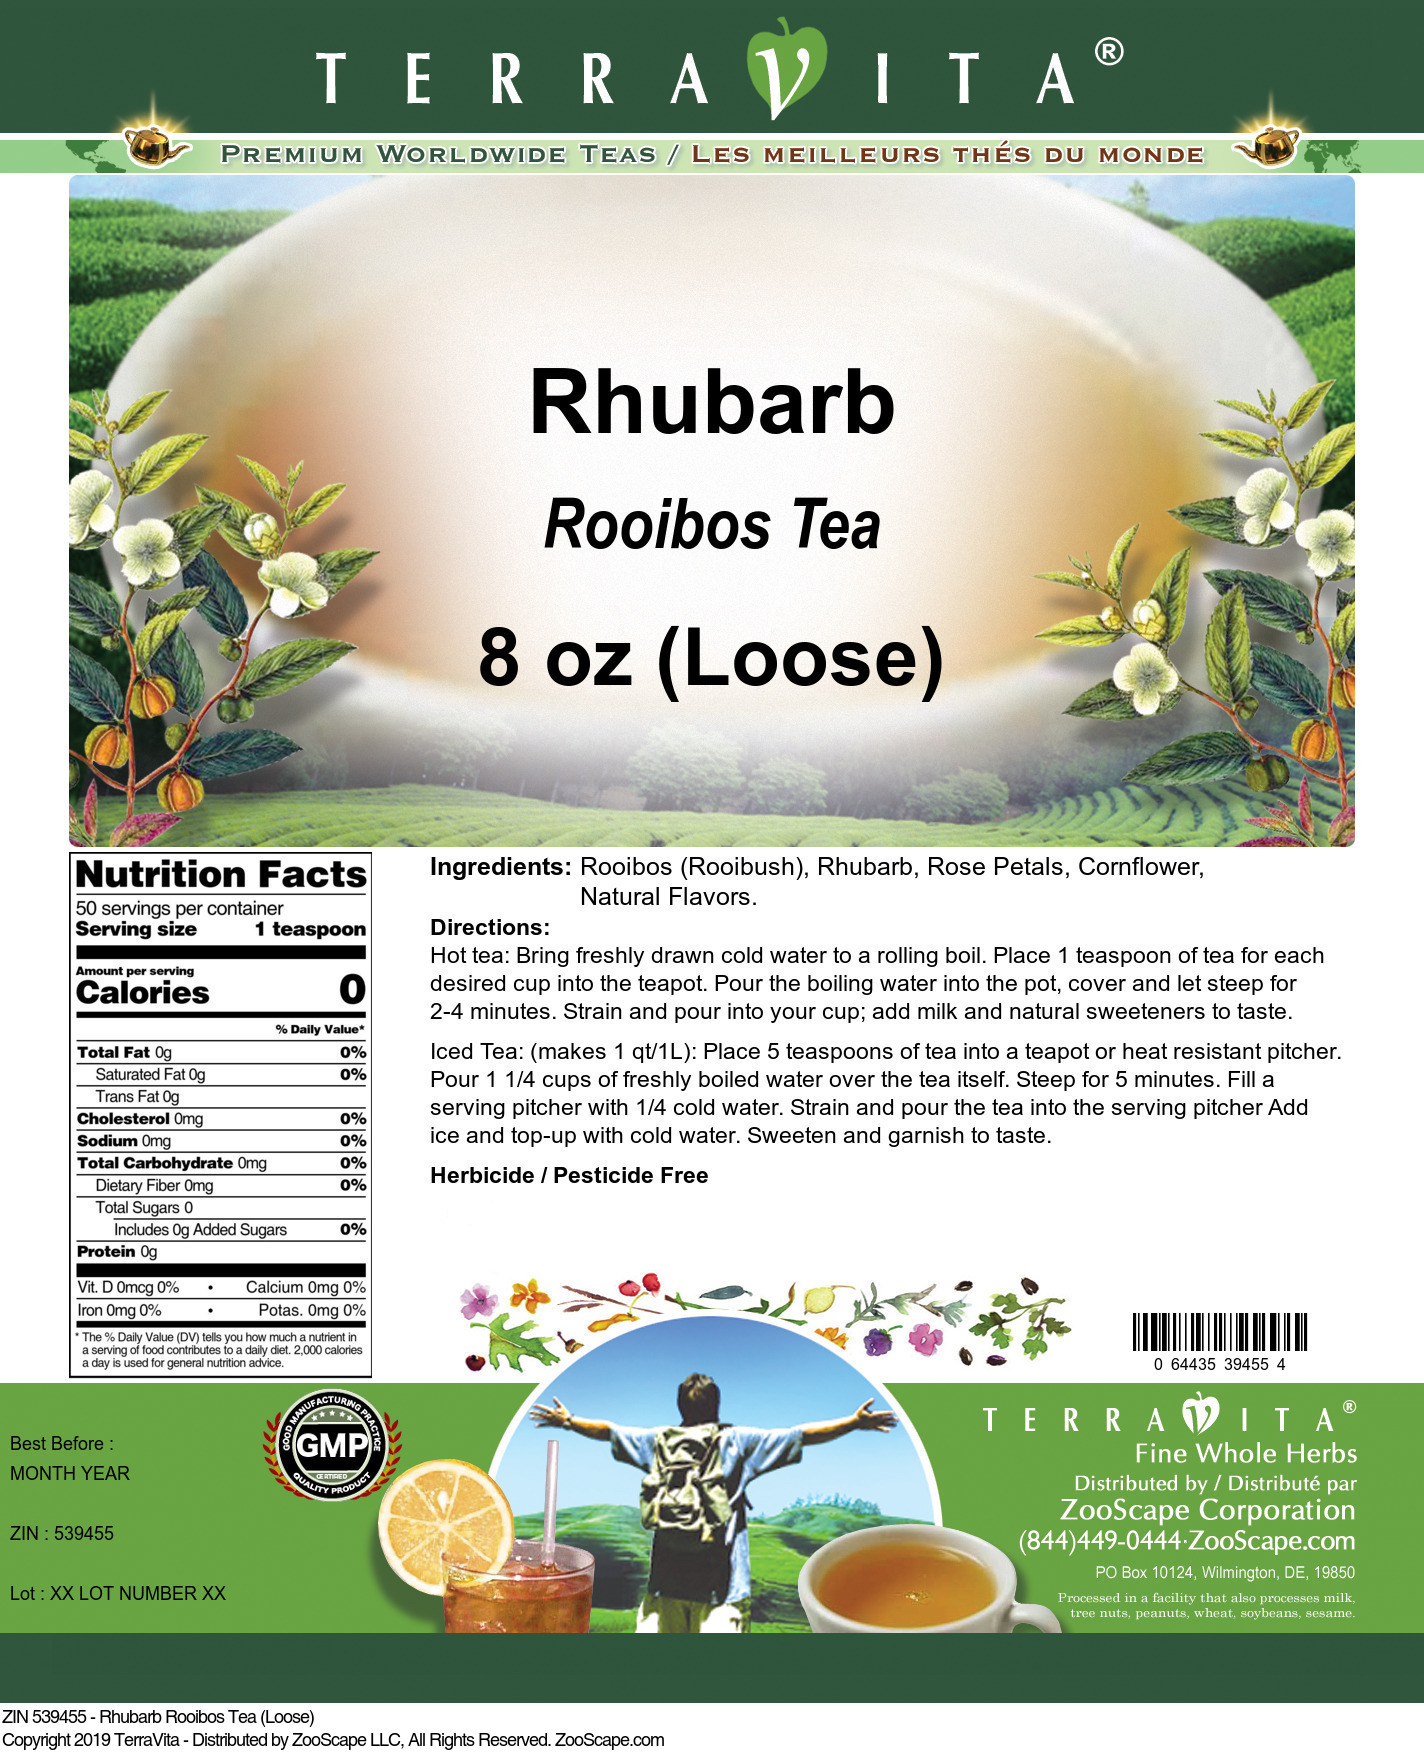 Rhubarb Rooibos Tea (Loose) - Label